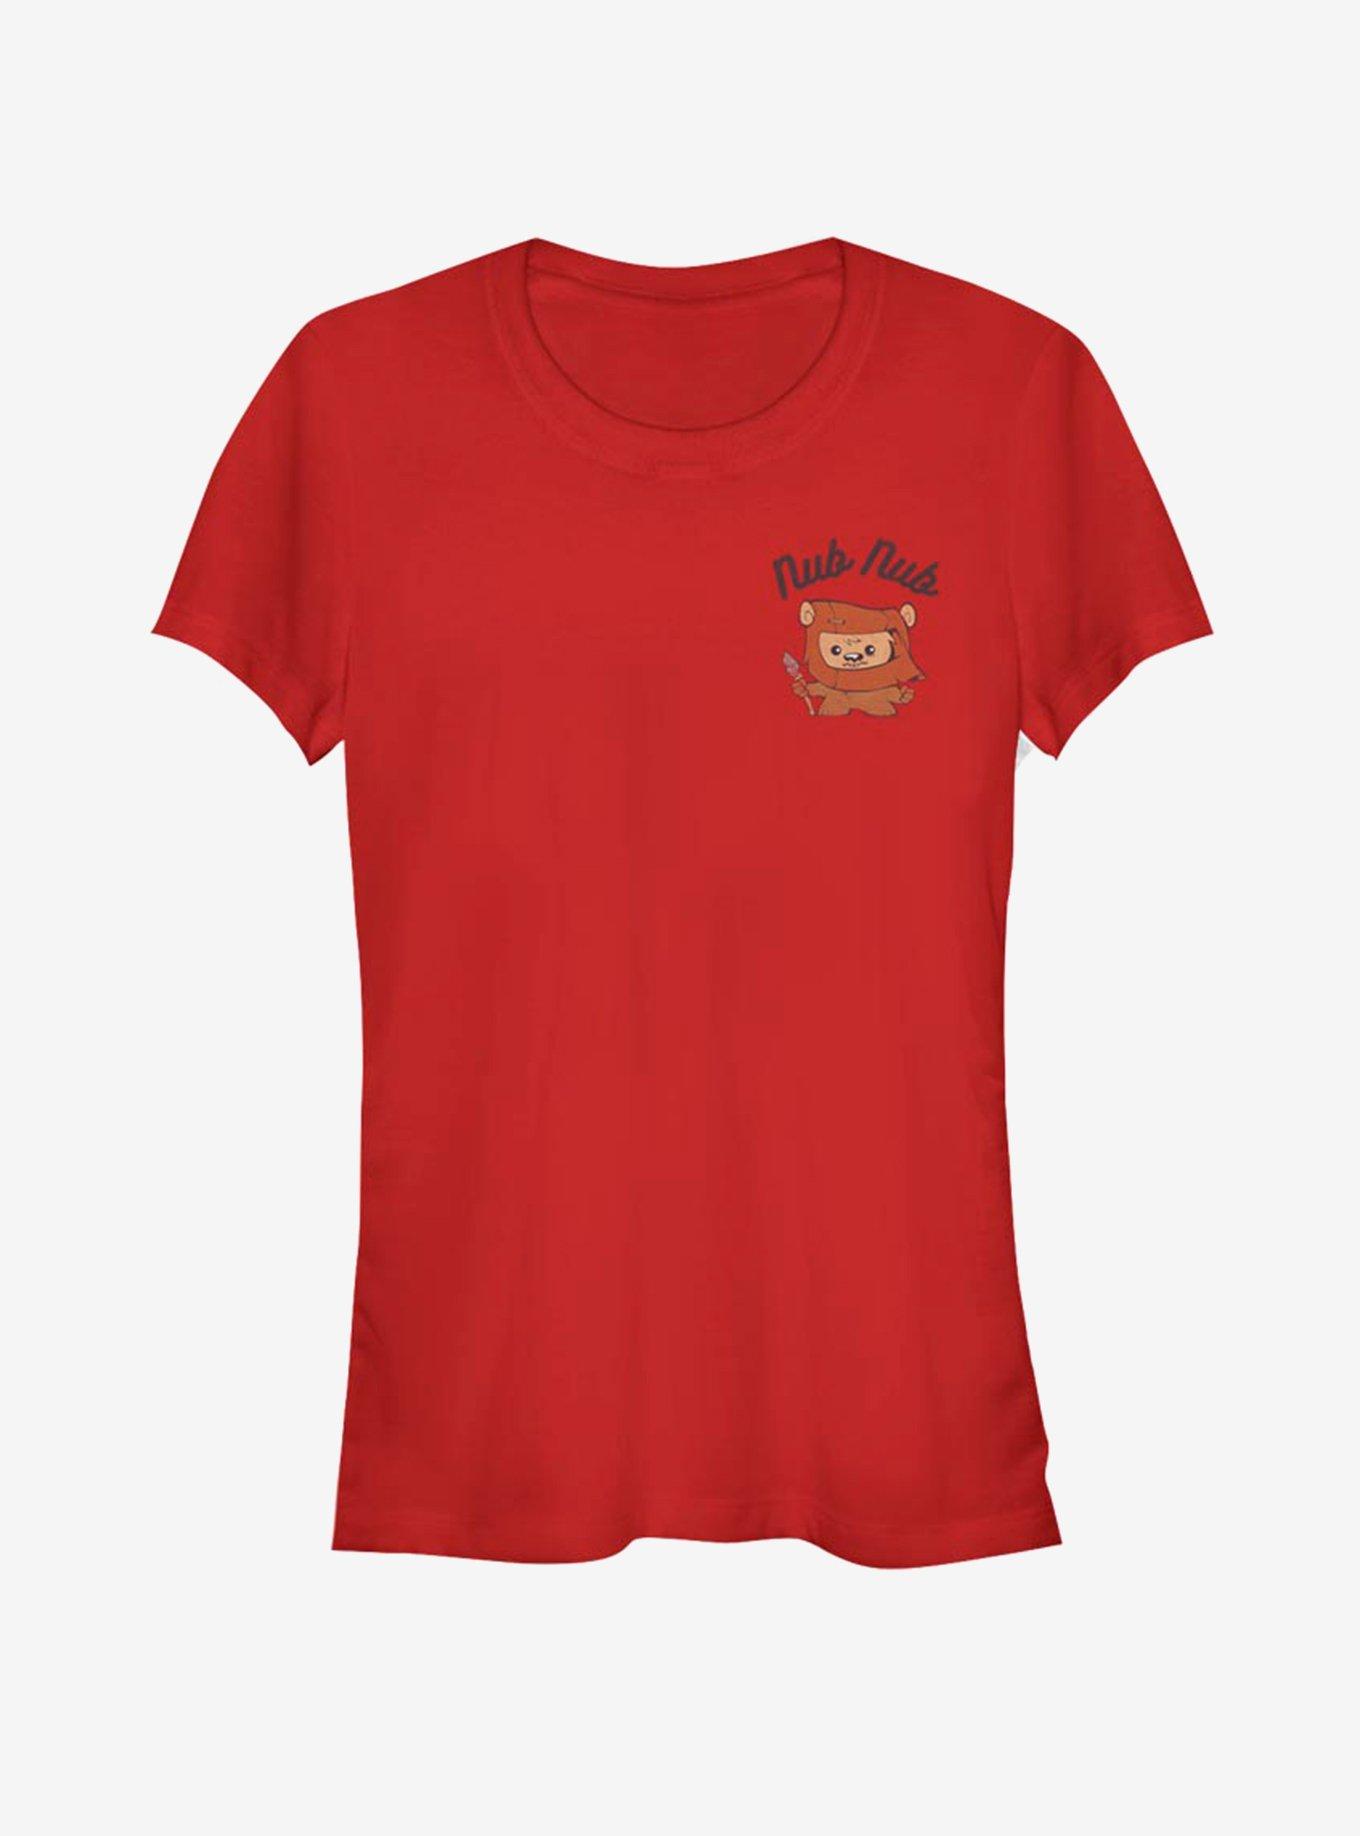 Star Wars Nub Nub Sketch Girls T-Shirt, RED, hi-res